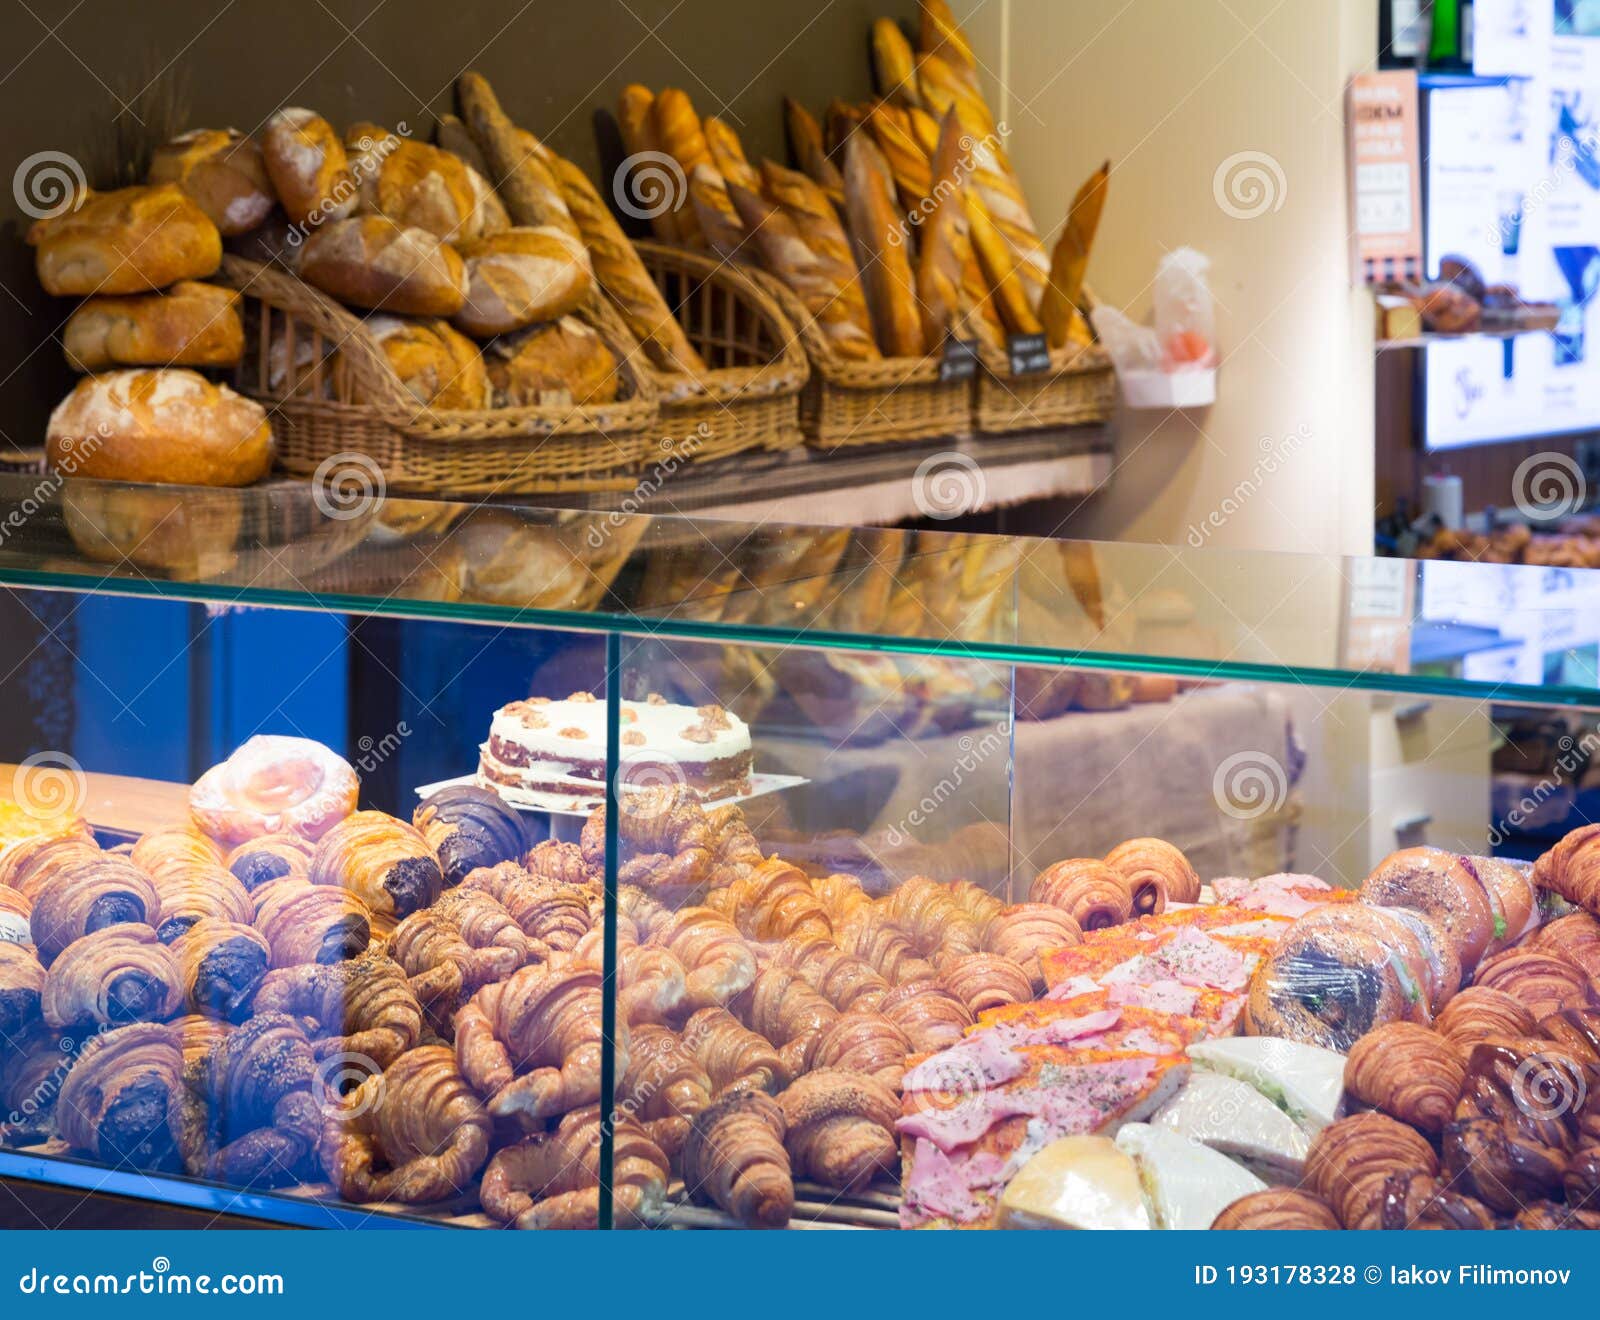 Spanish Bakery. High Quality Photo Stock Photo - Image of display